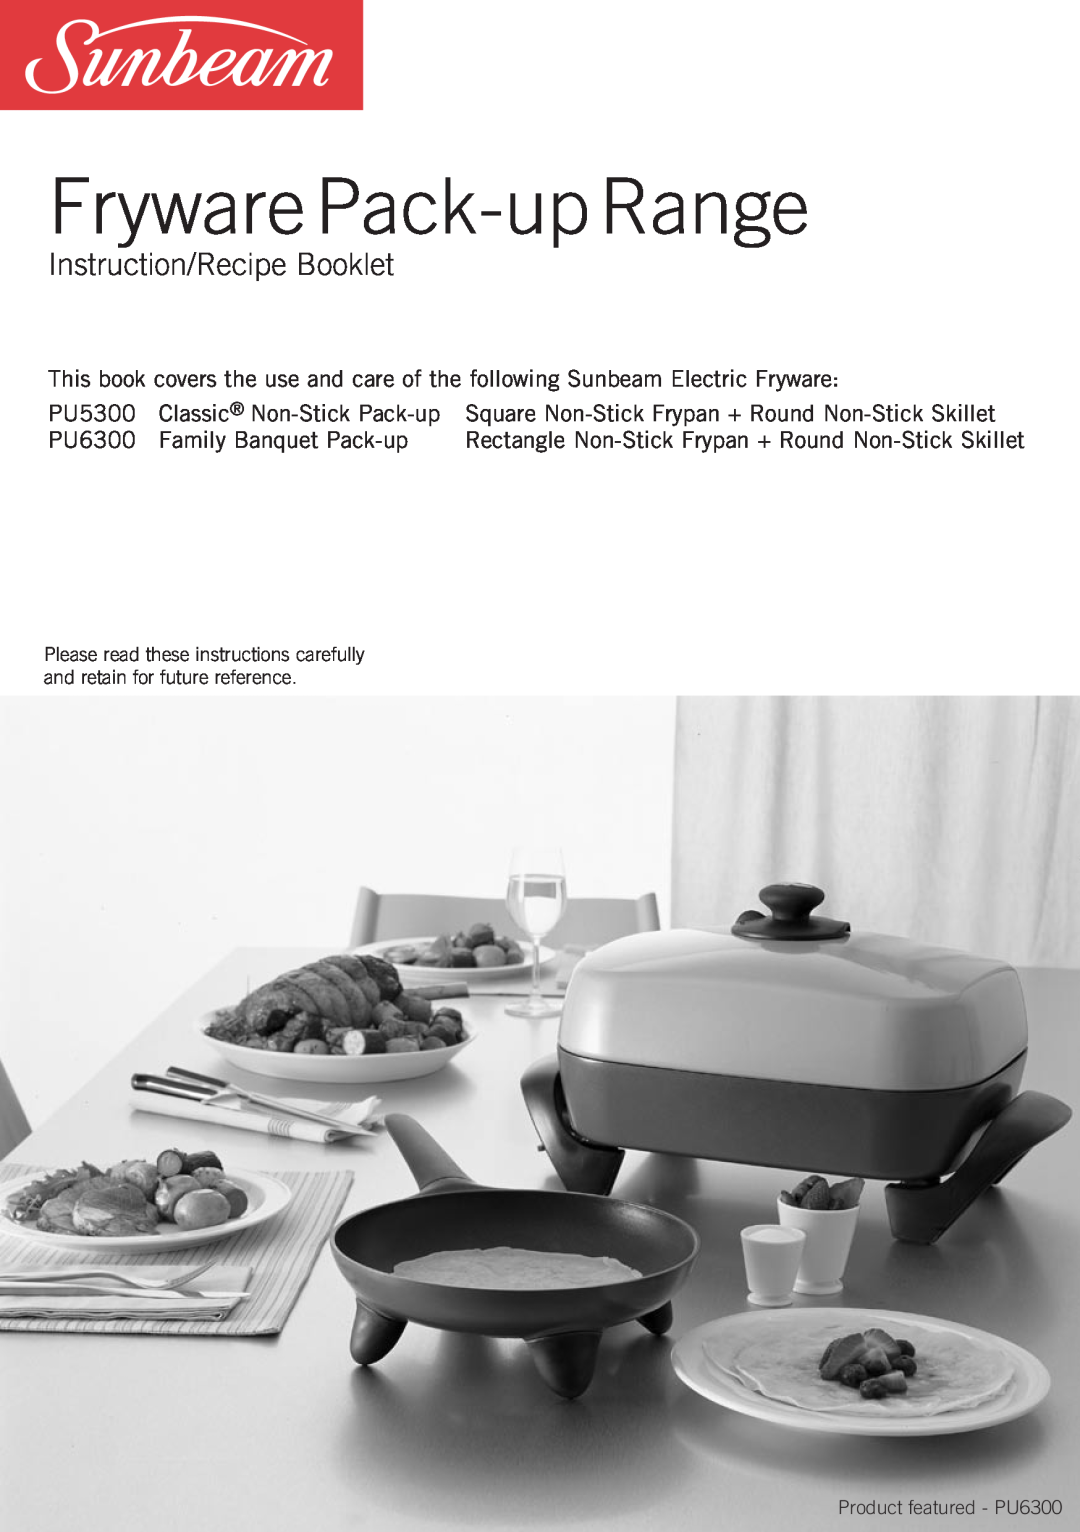 Sunbeam PU5300 manual Instruction/Recipe Booklet, Fryware Pack-upRange, Product featured - PU6300 